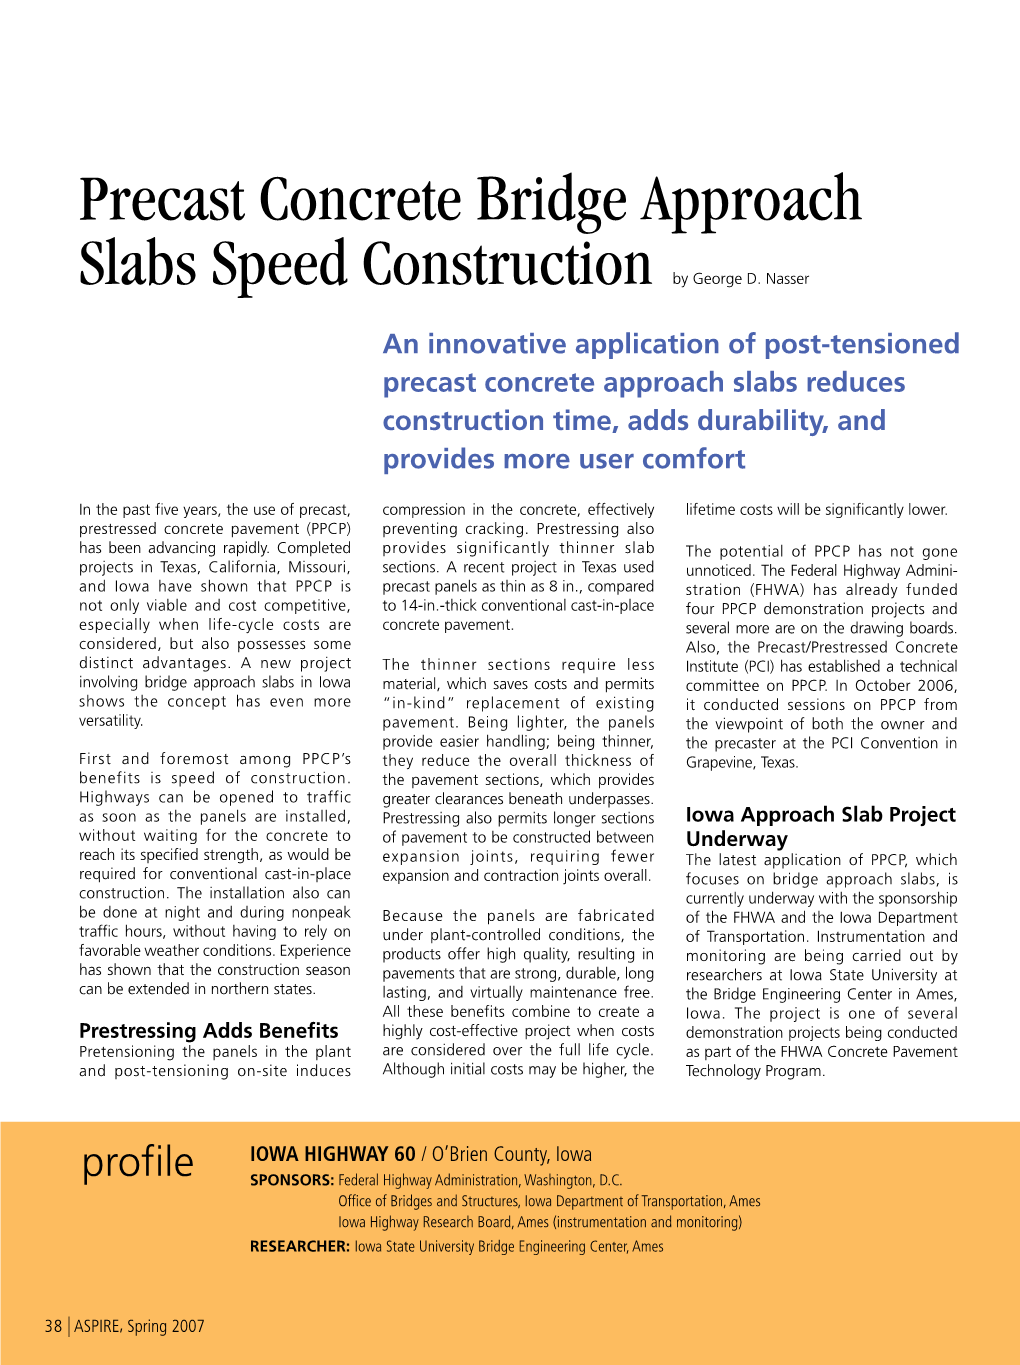 Precast Concrete Bridge Approach Slabs Speed Construction